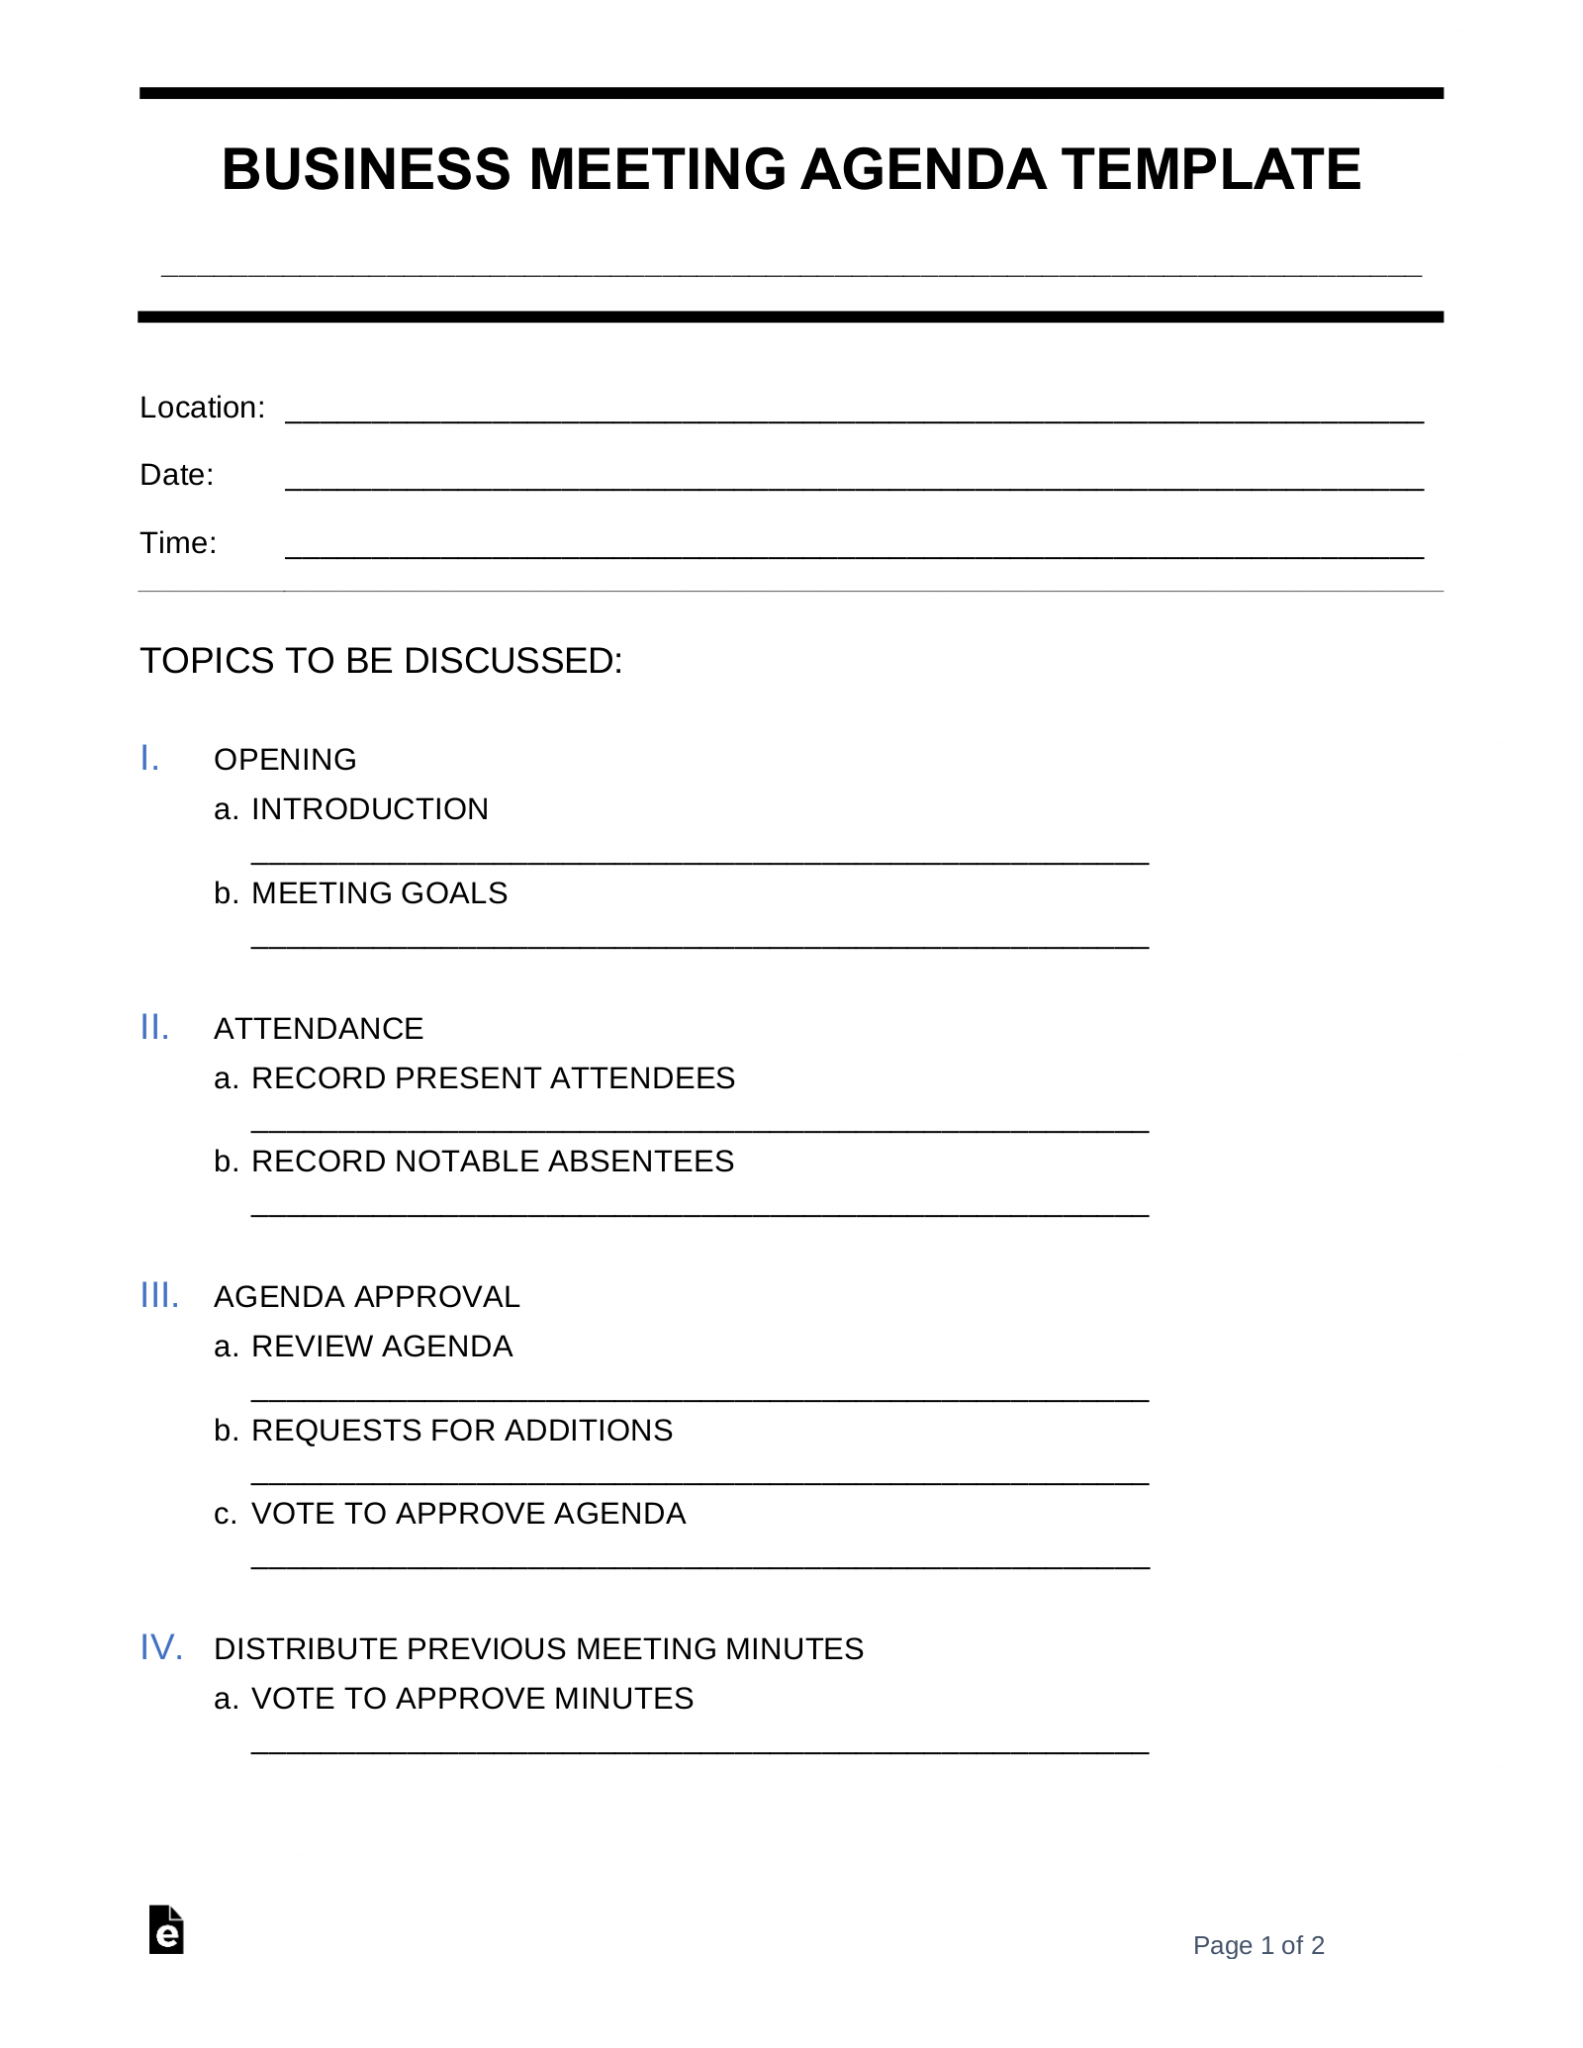 free-business-meeting-agenda-template-sample-pdf-word-eforms